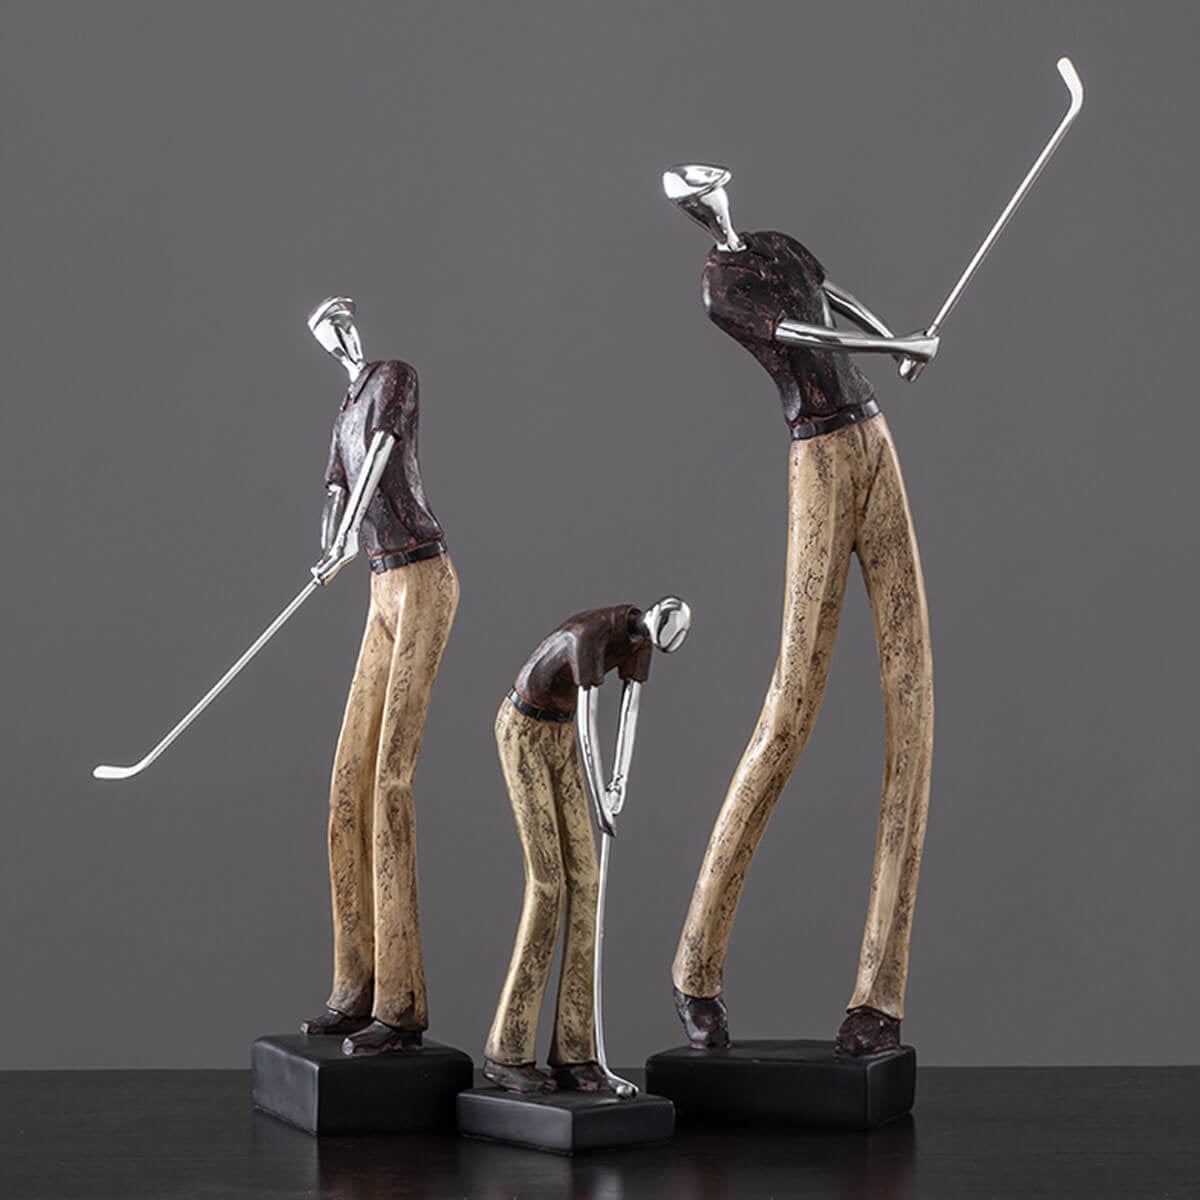 Abstract golf figurine